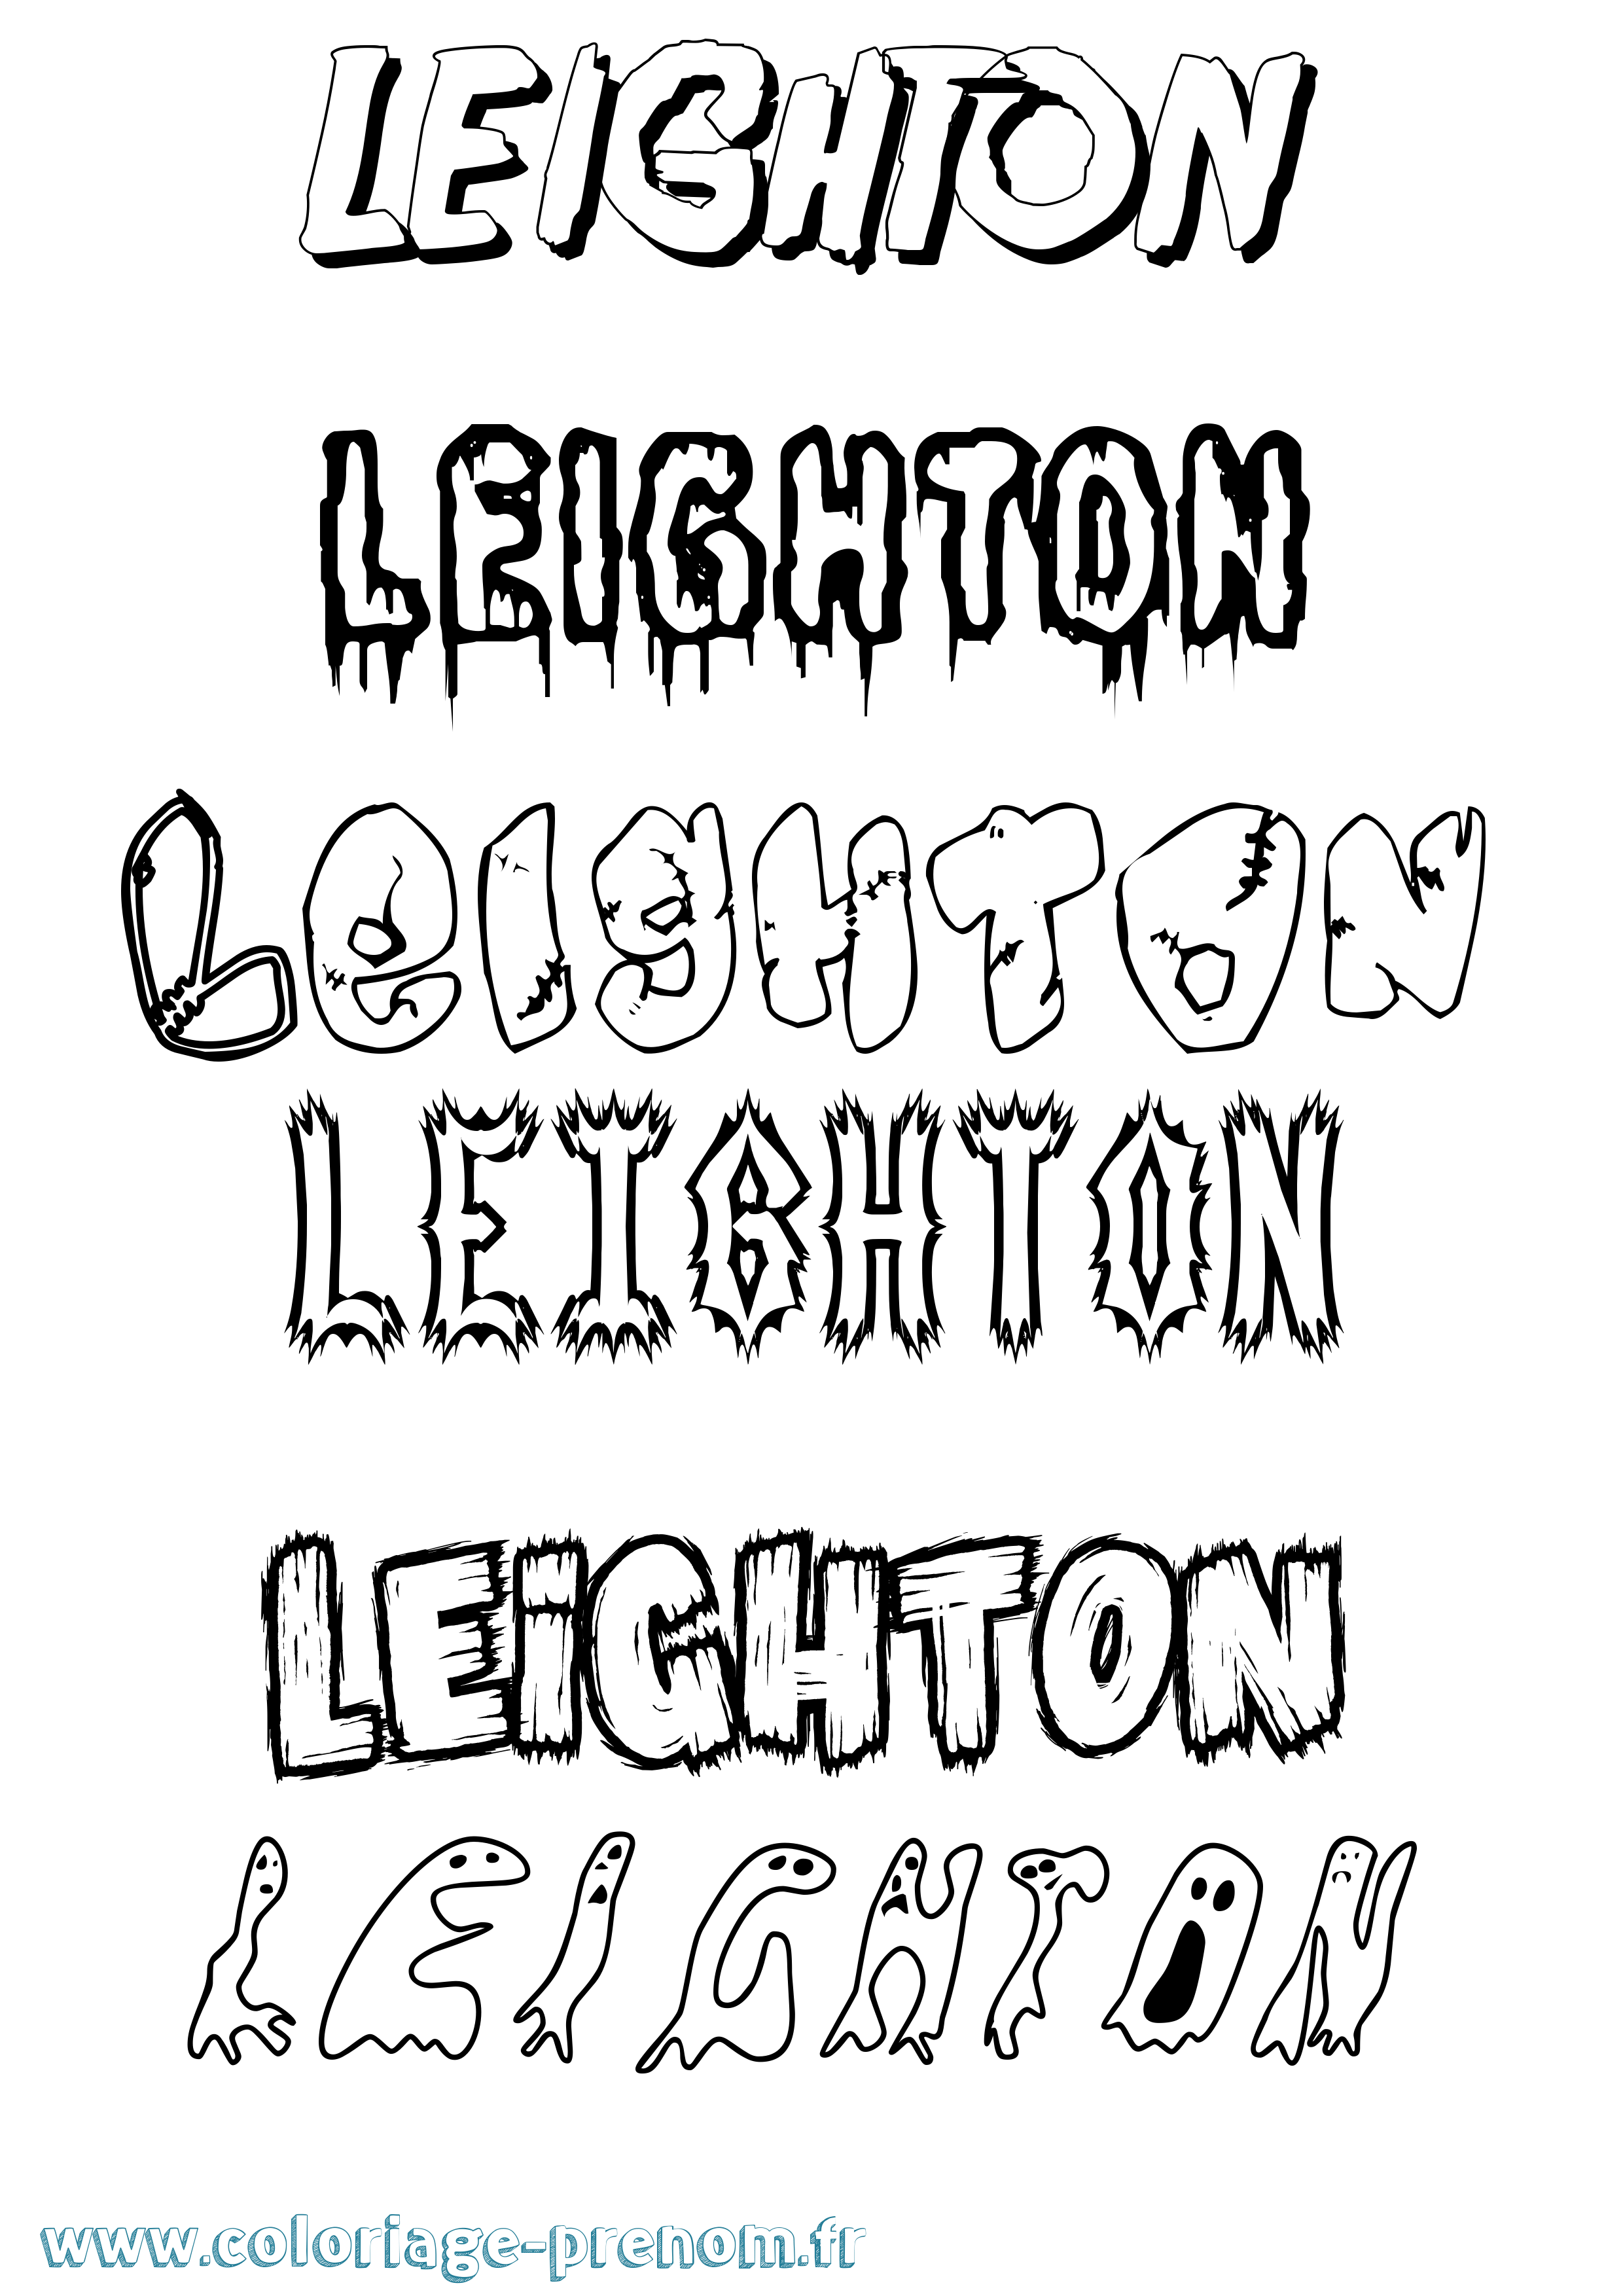 Coloriage prénom Leighton Frisson